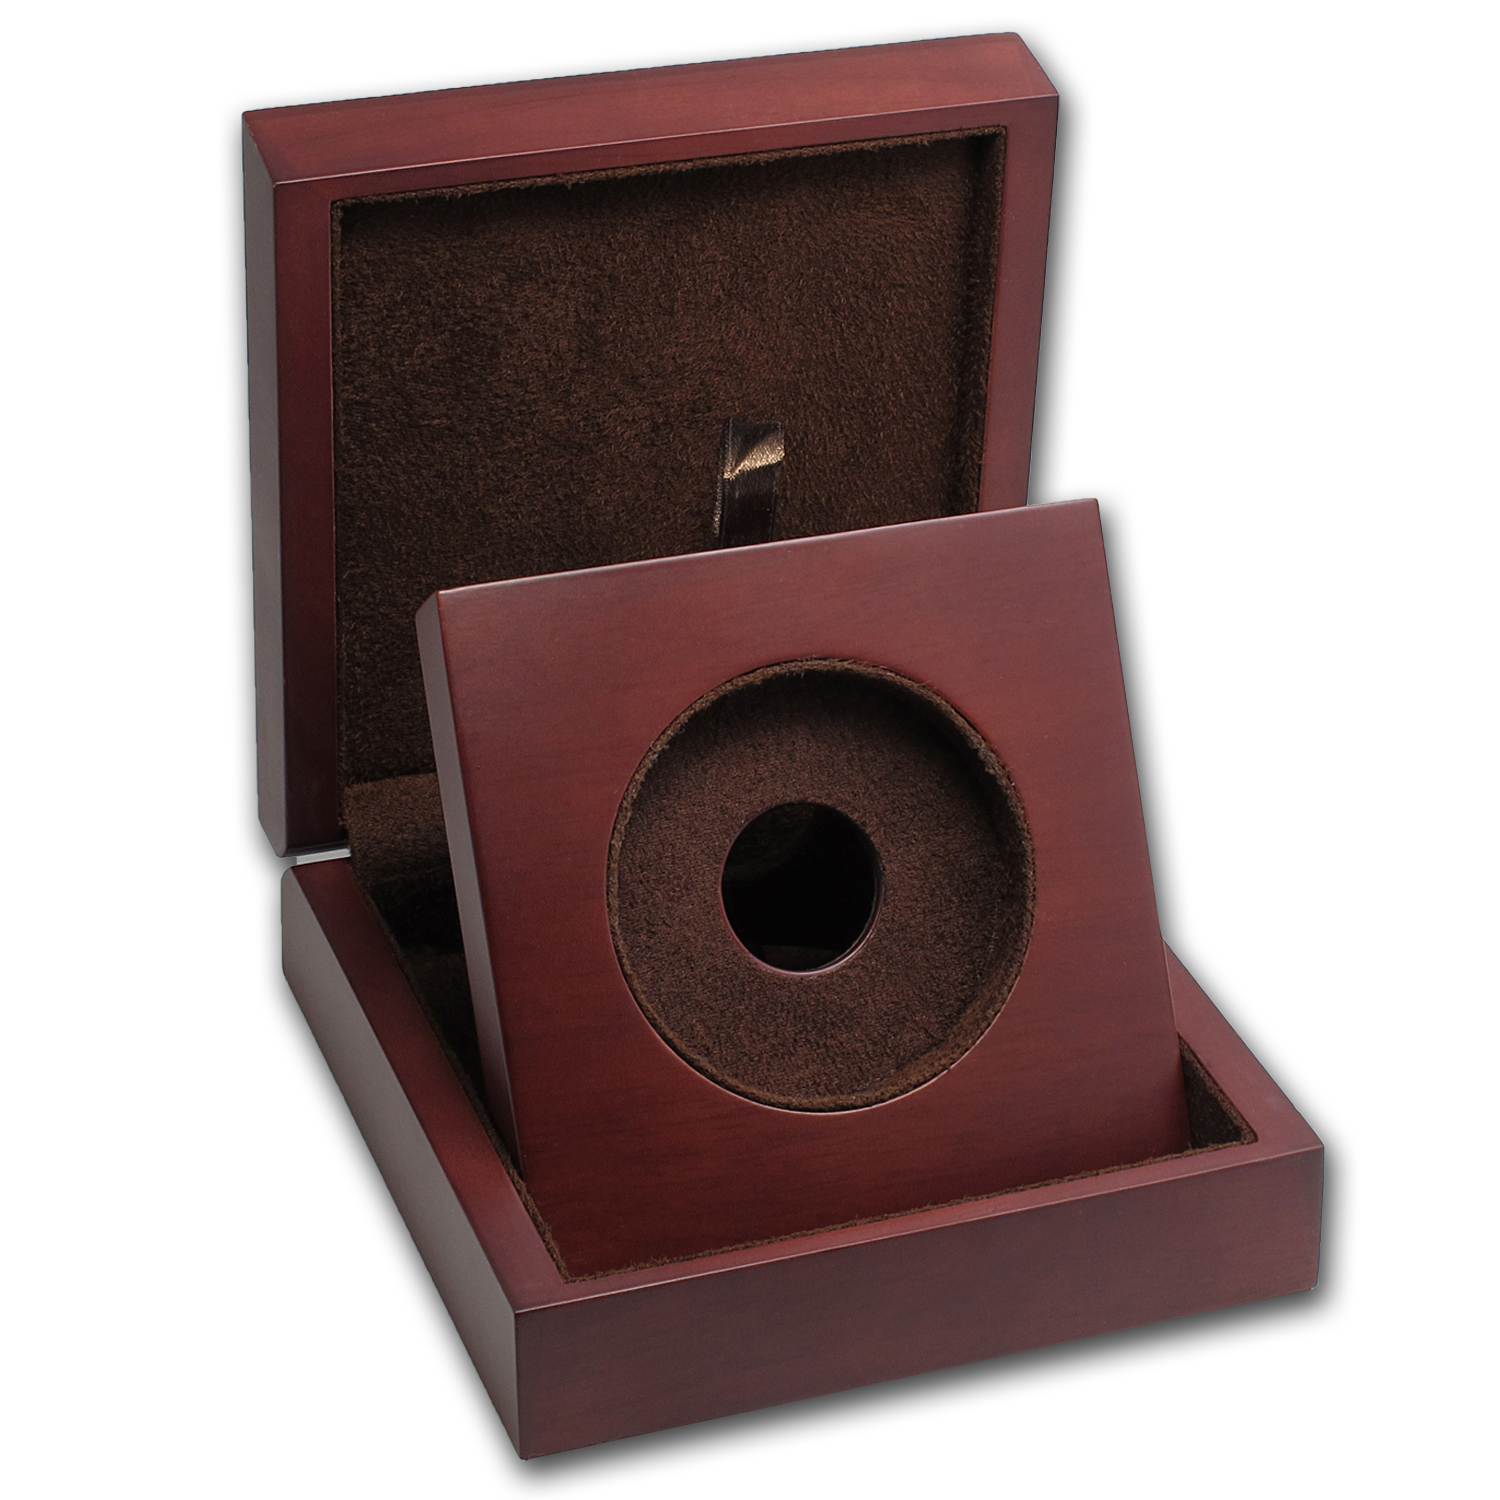 Buy APMEX Wood Gift Box - 10 oz Perth Mint Gold Coin Series 1 & 3